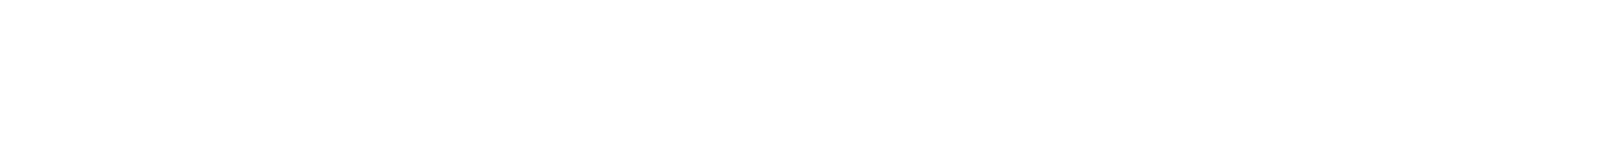 Amienskate